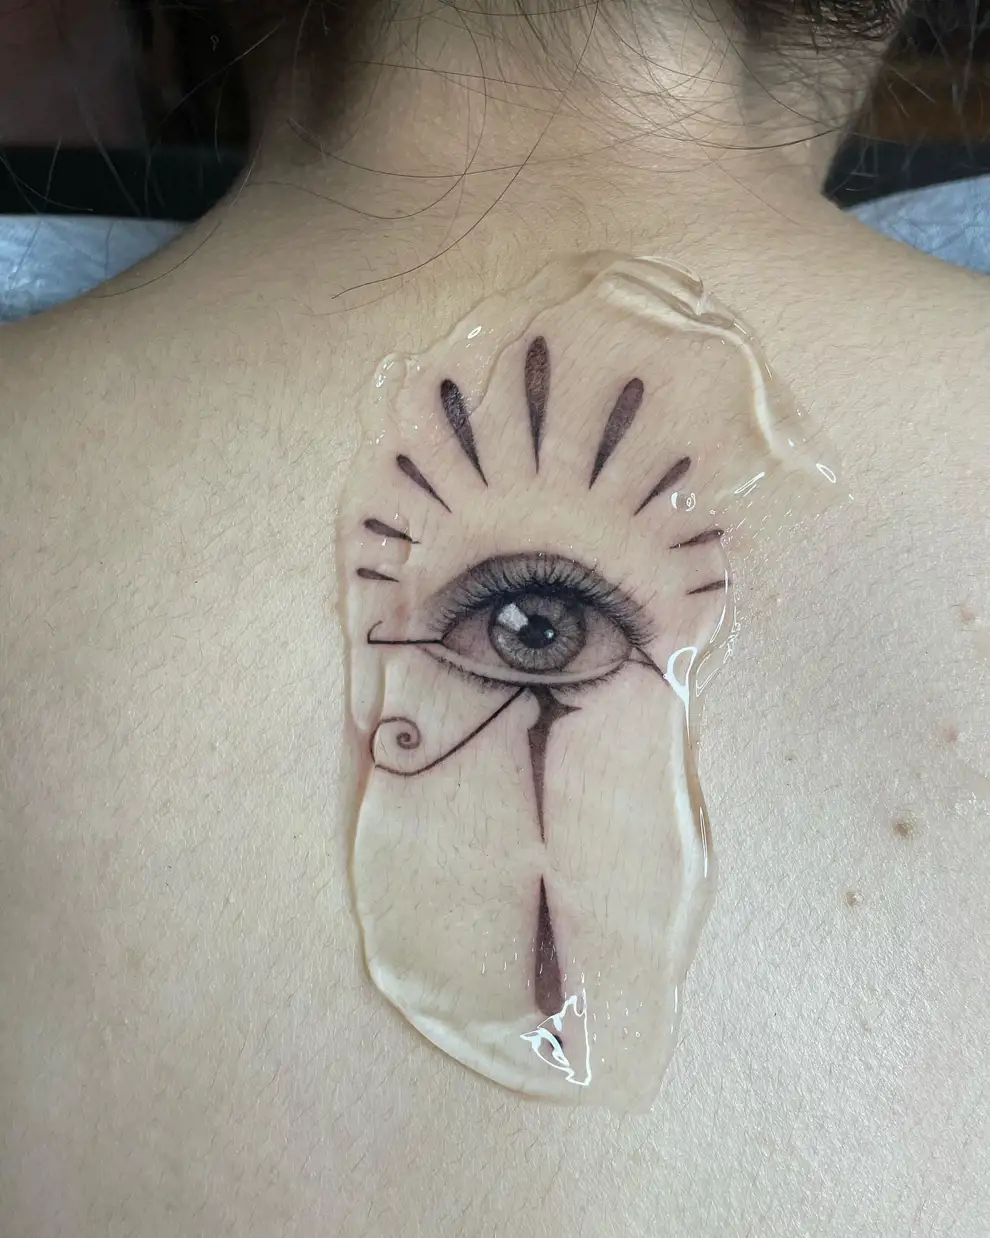 Tatuajes con significado: ojo egipcio